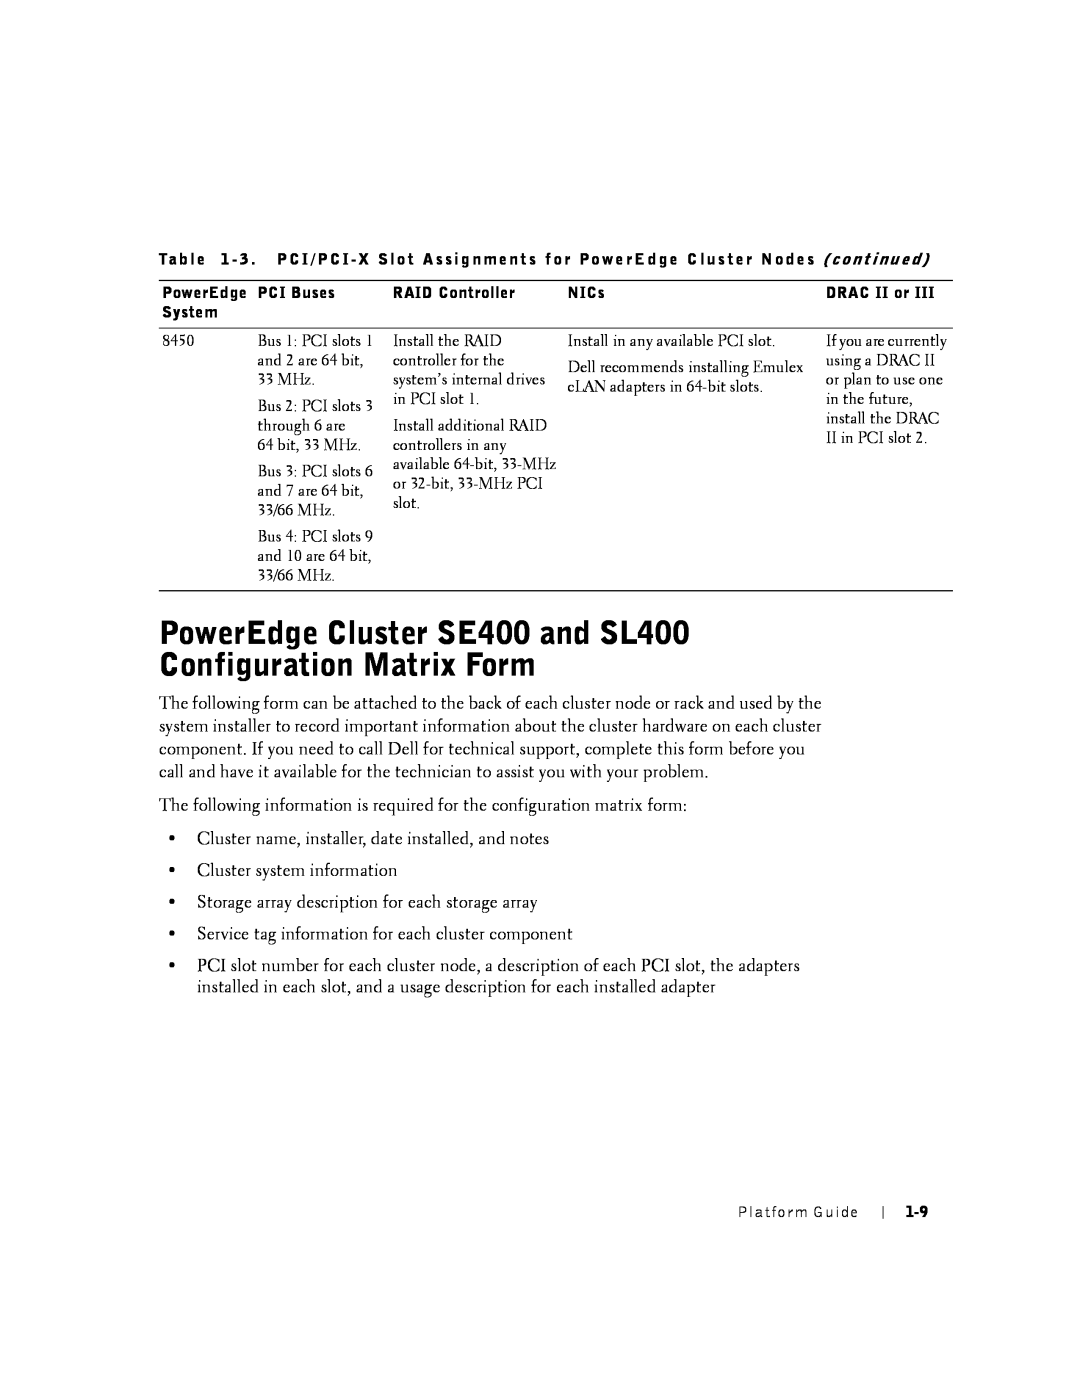 Dell manual PowerEdge Cluster SE400 and SL400 Configuration Matrix Form 